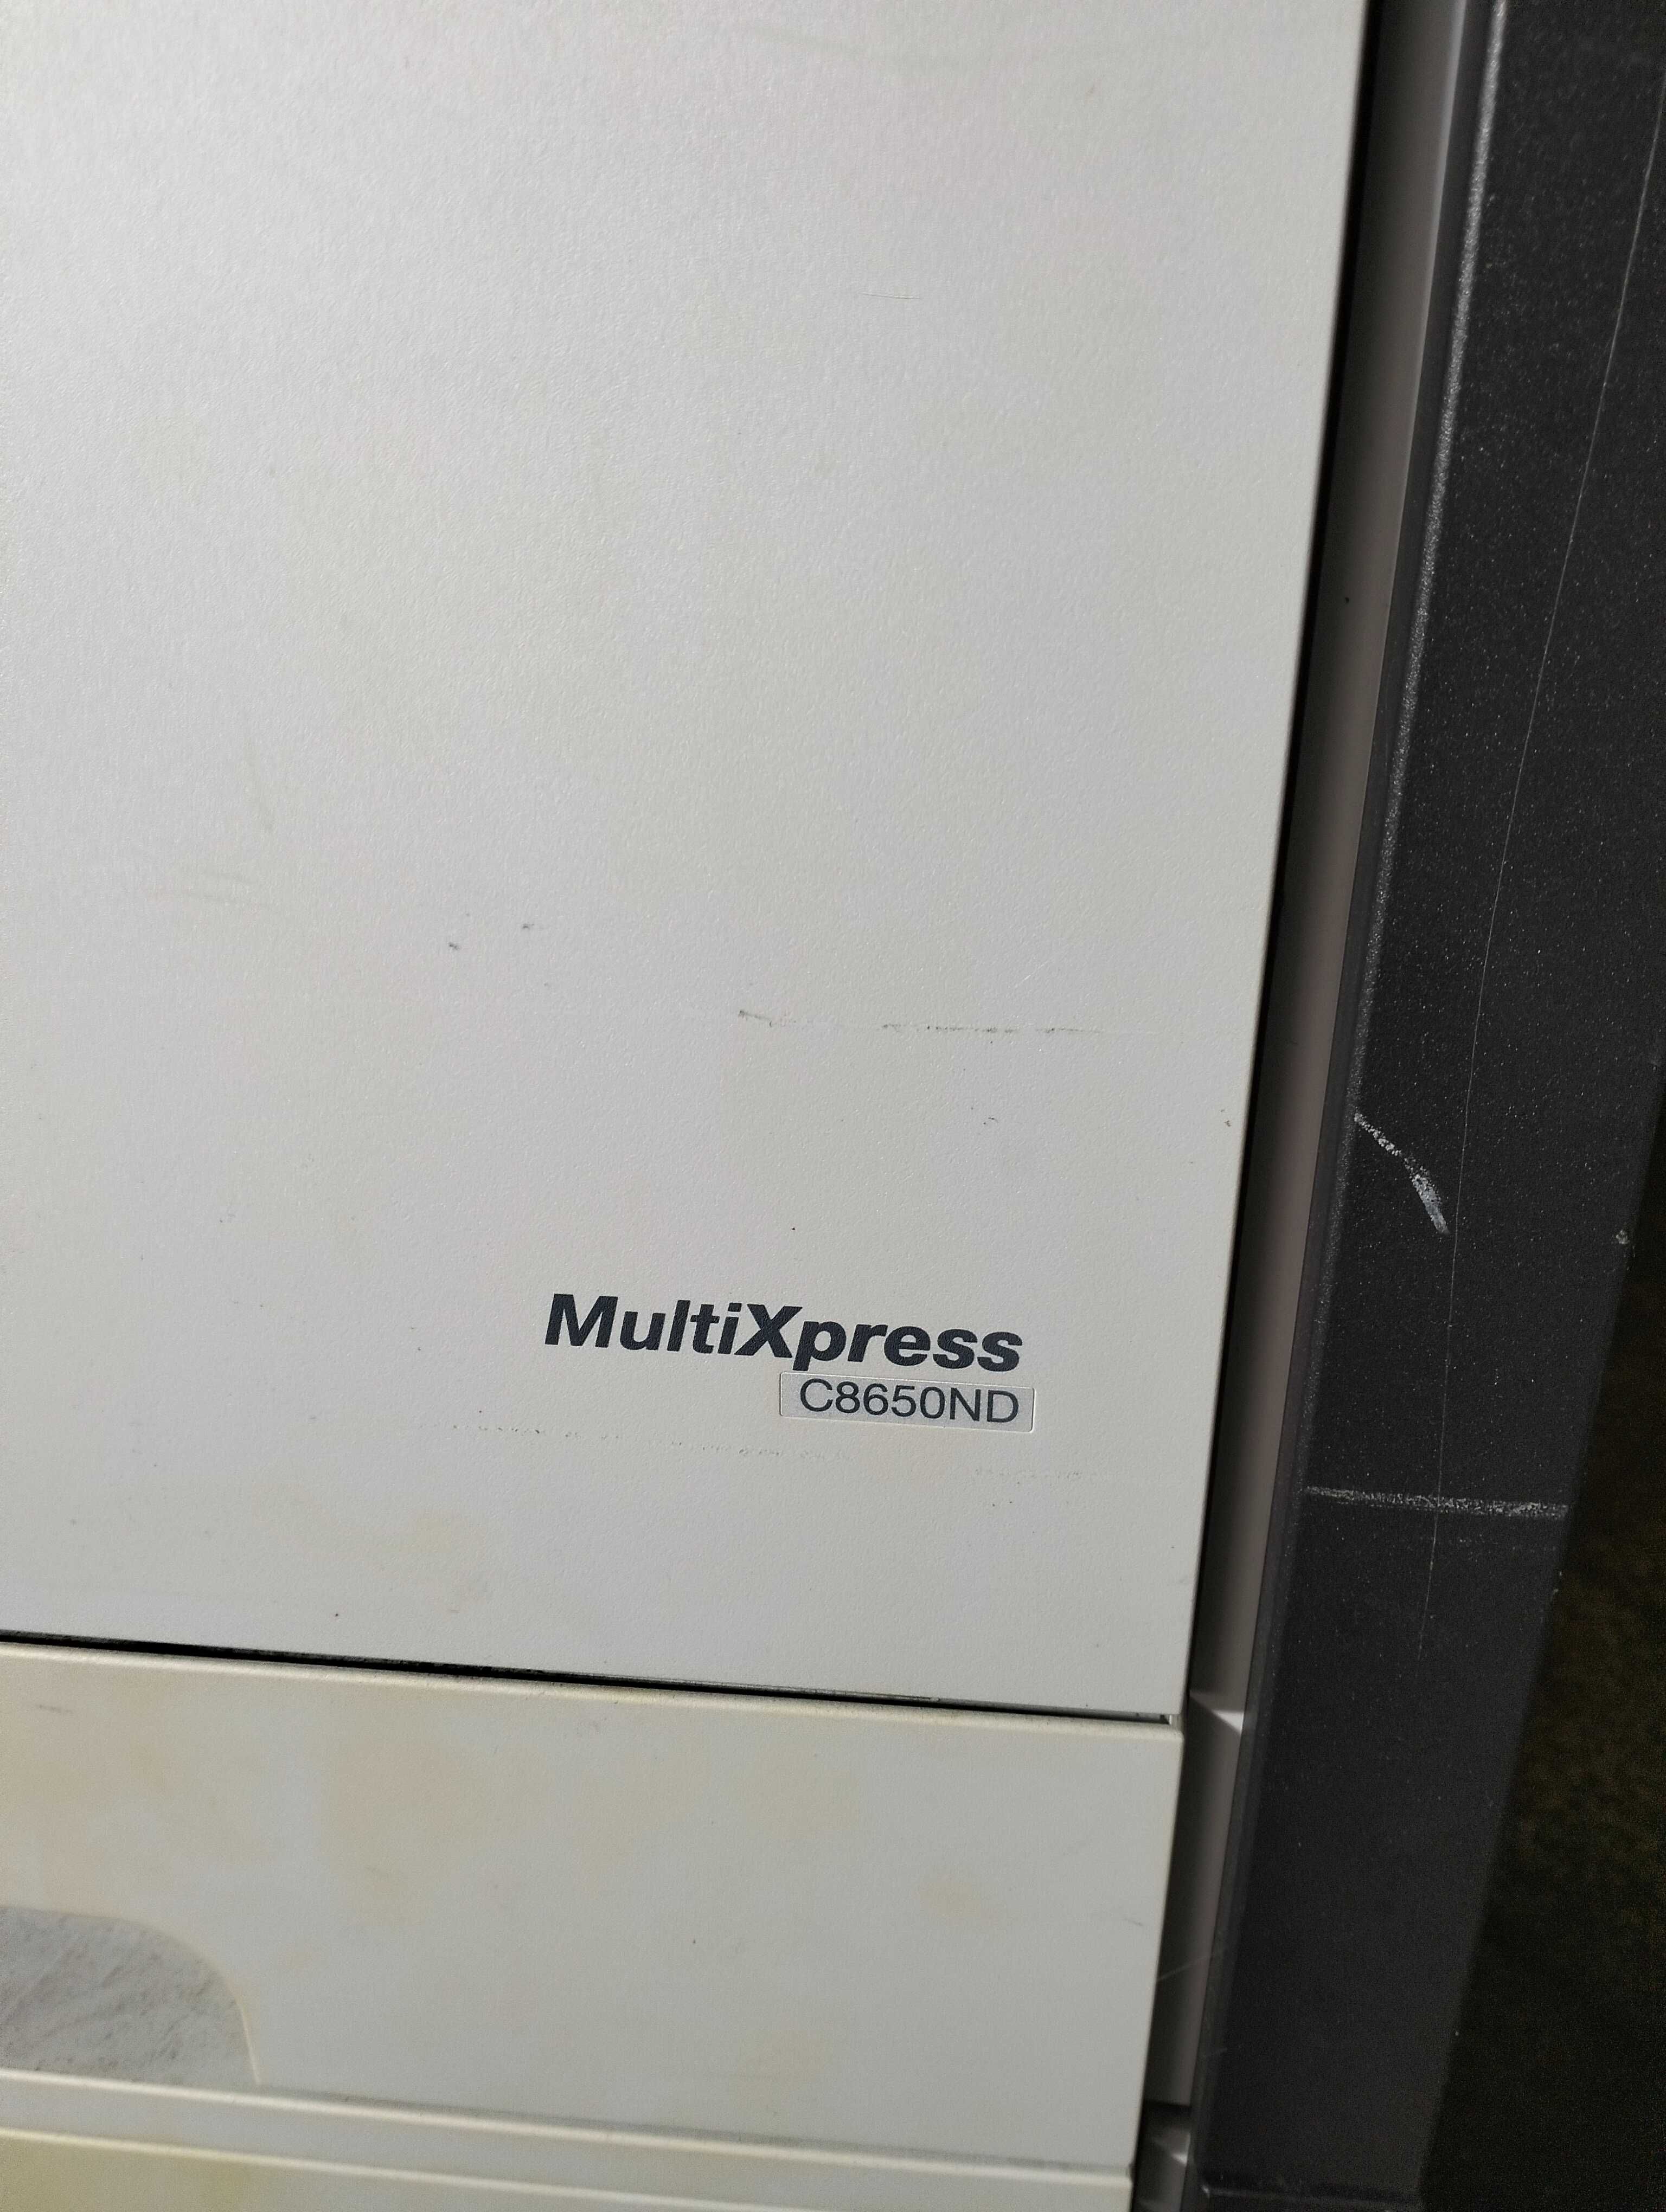 Samsung Multixpress C8650ND